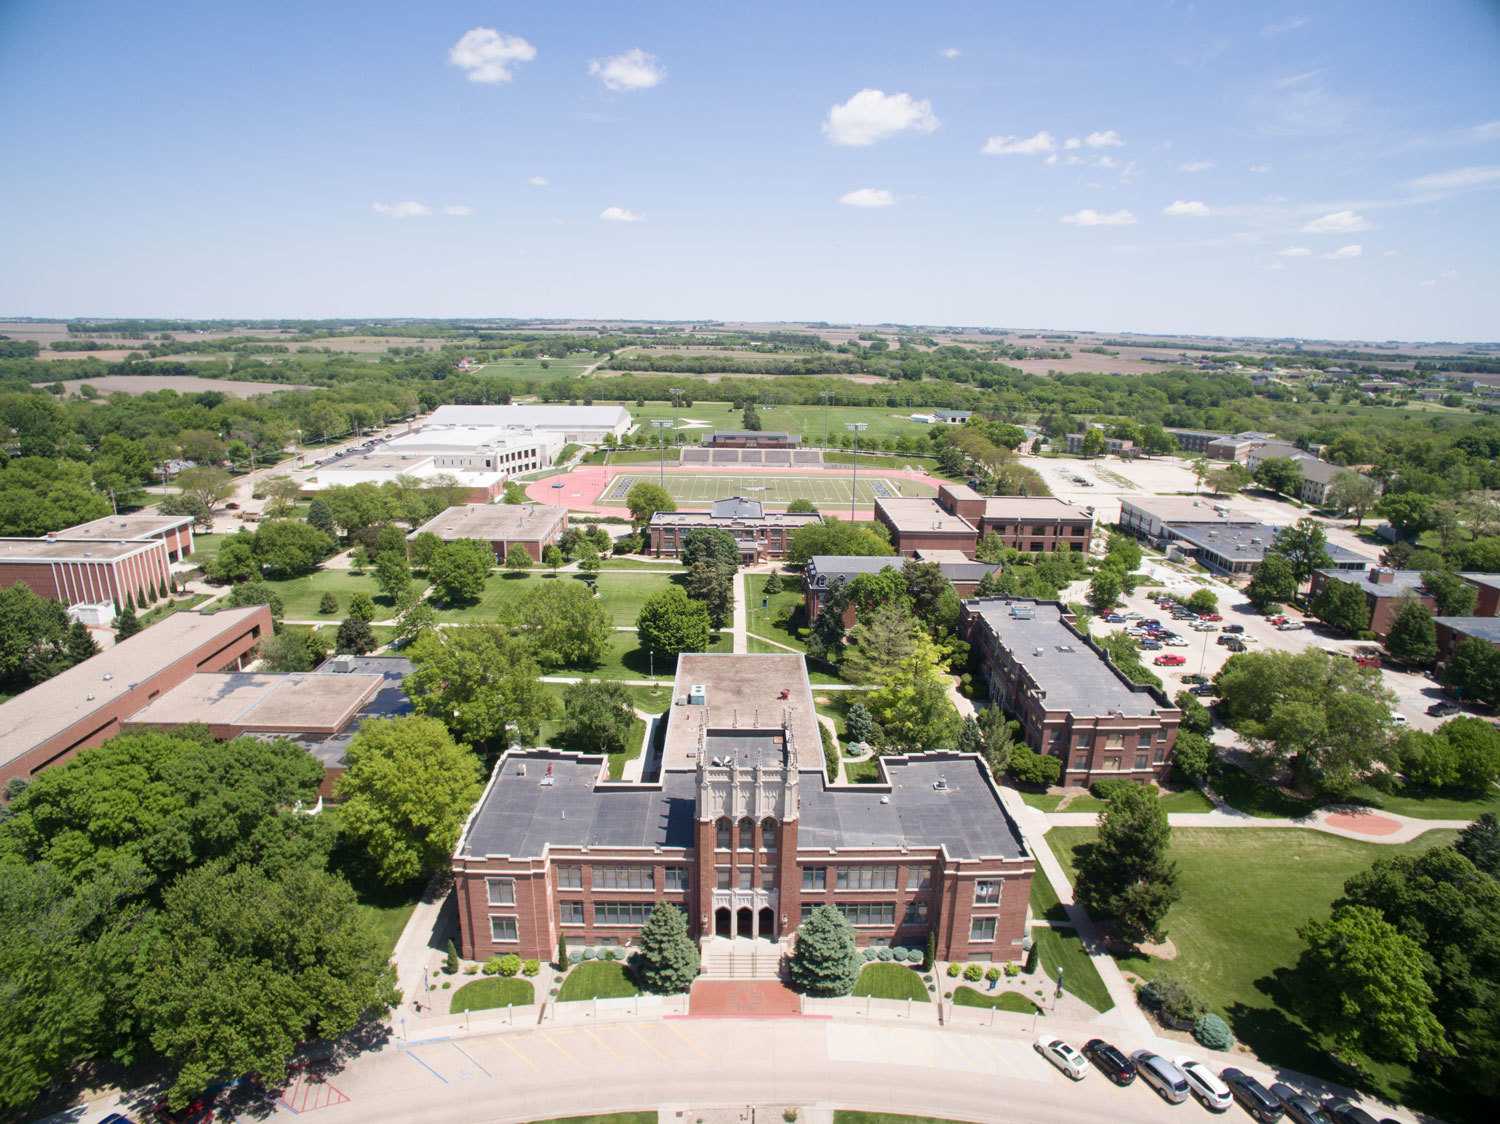 Concordia University Nebraska